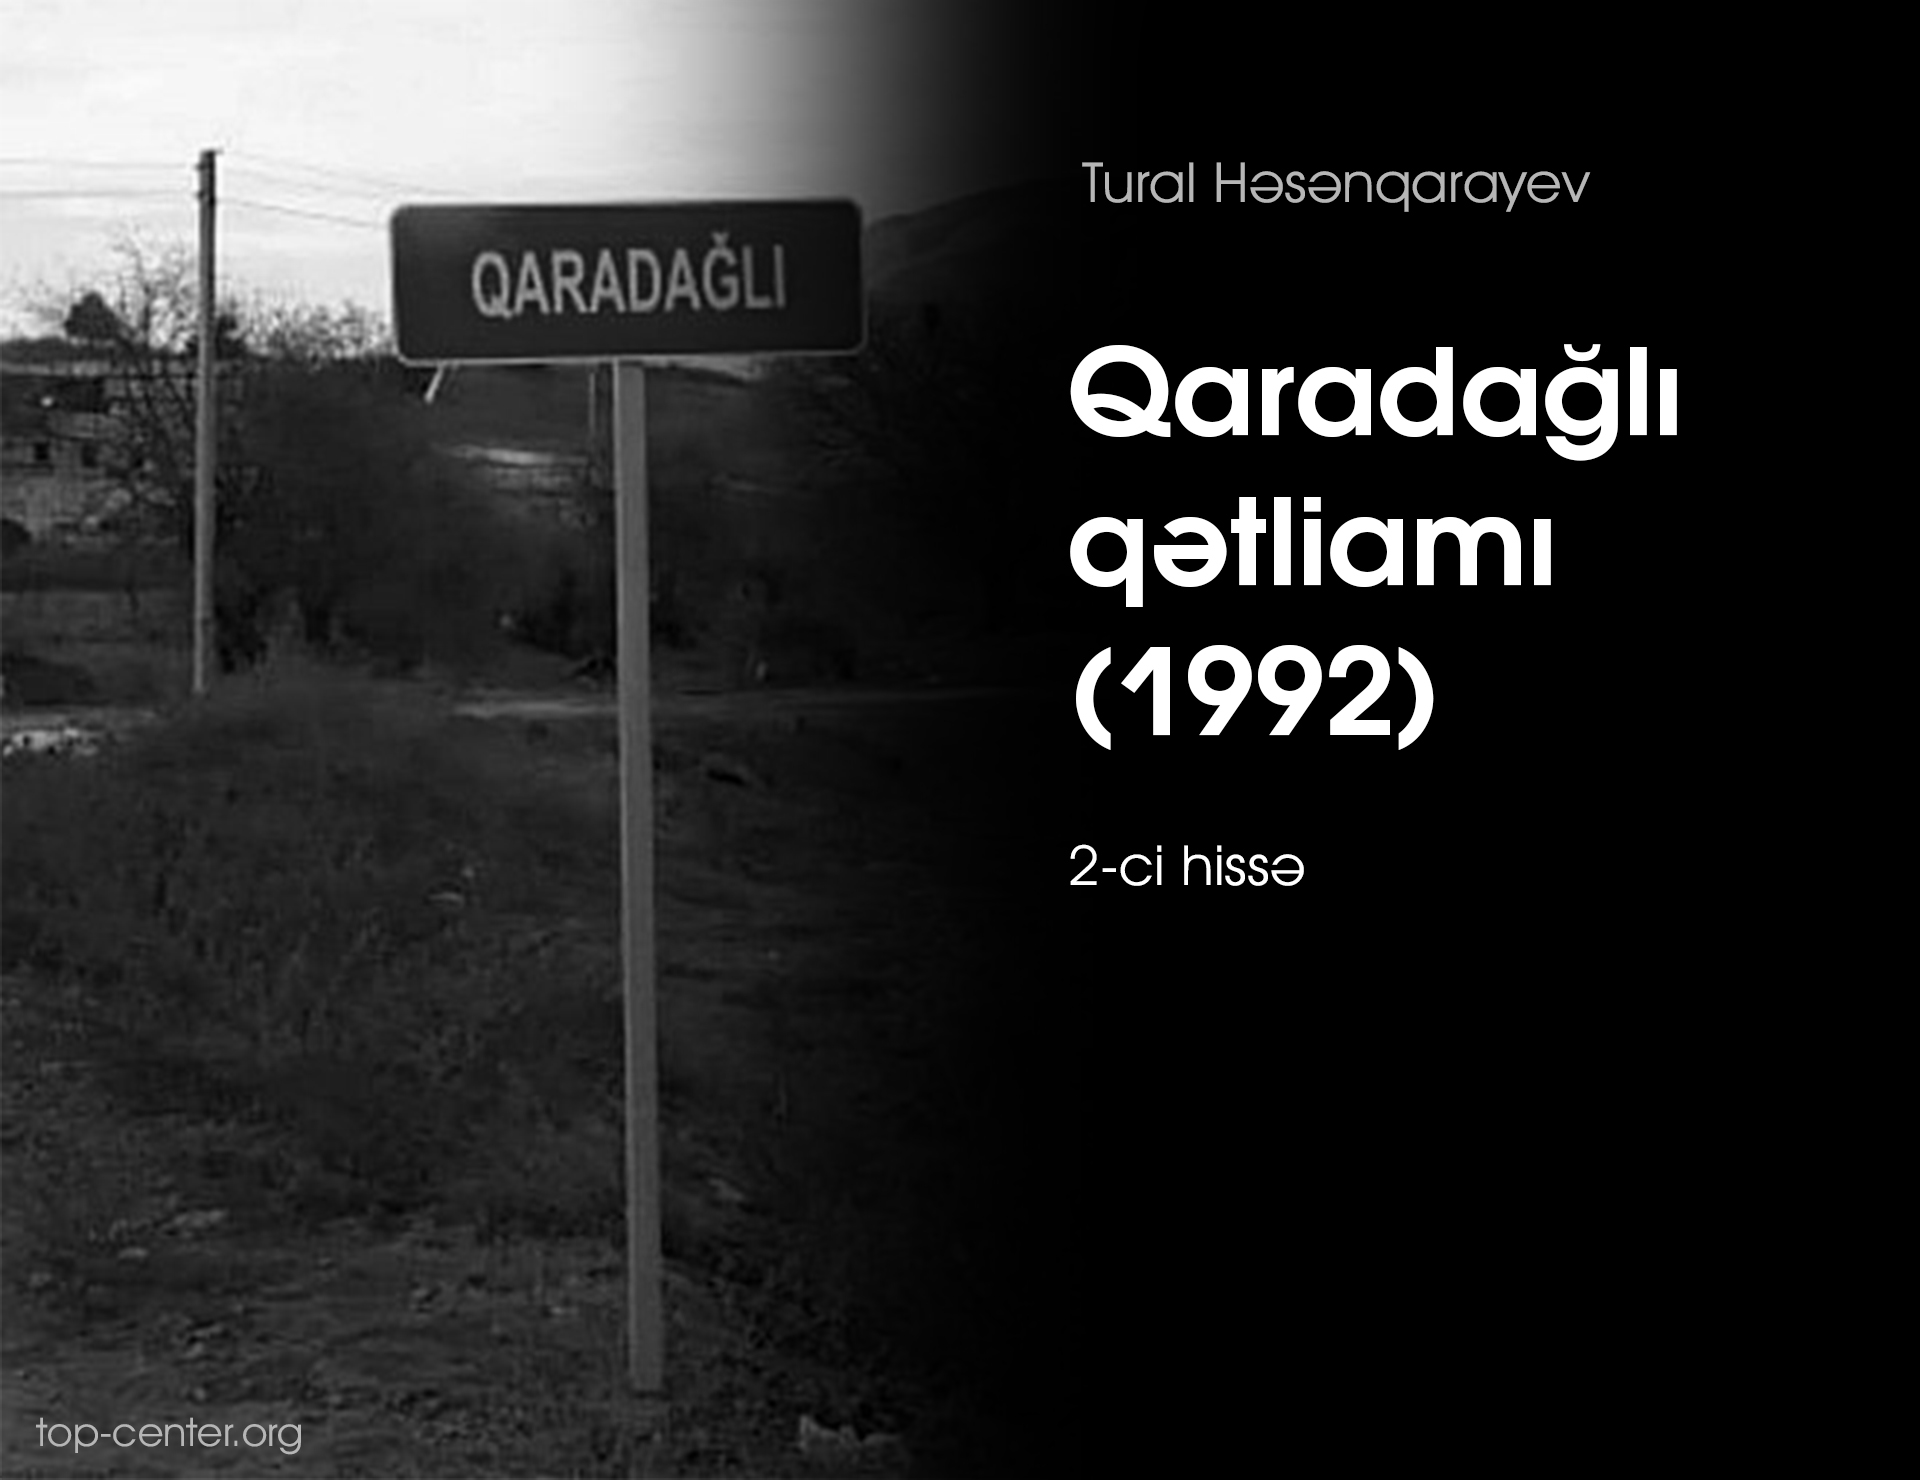 Garadagli Massacre (1992) (Part 2)